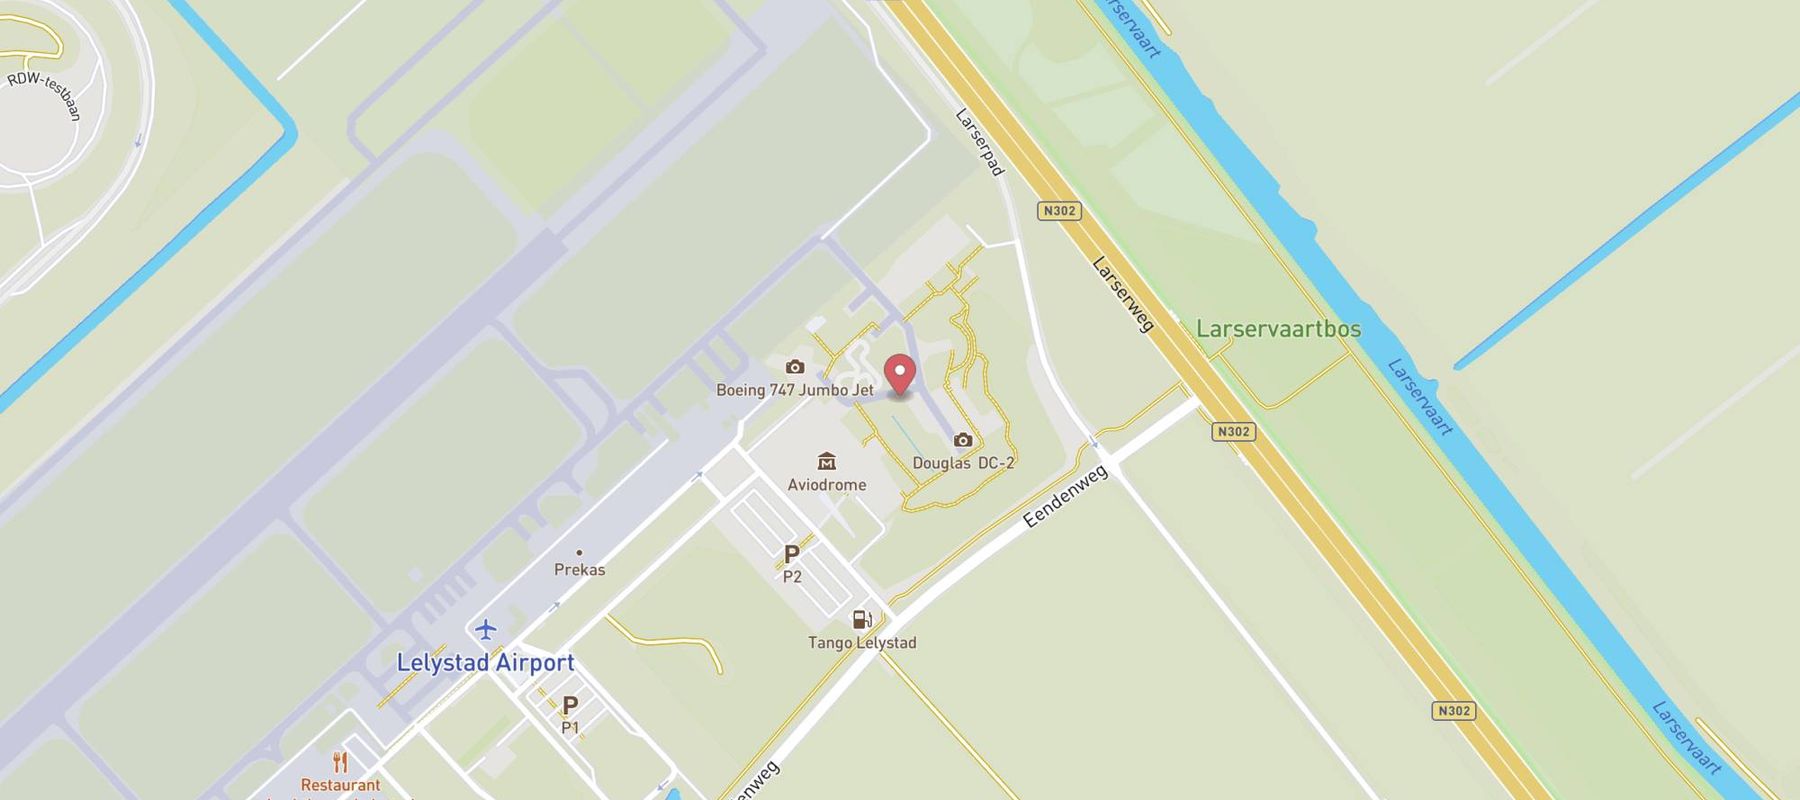 Luchtvaartmuseum Aviodrome map